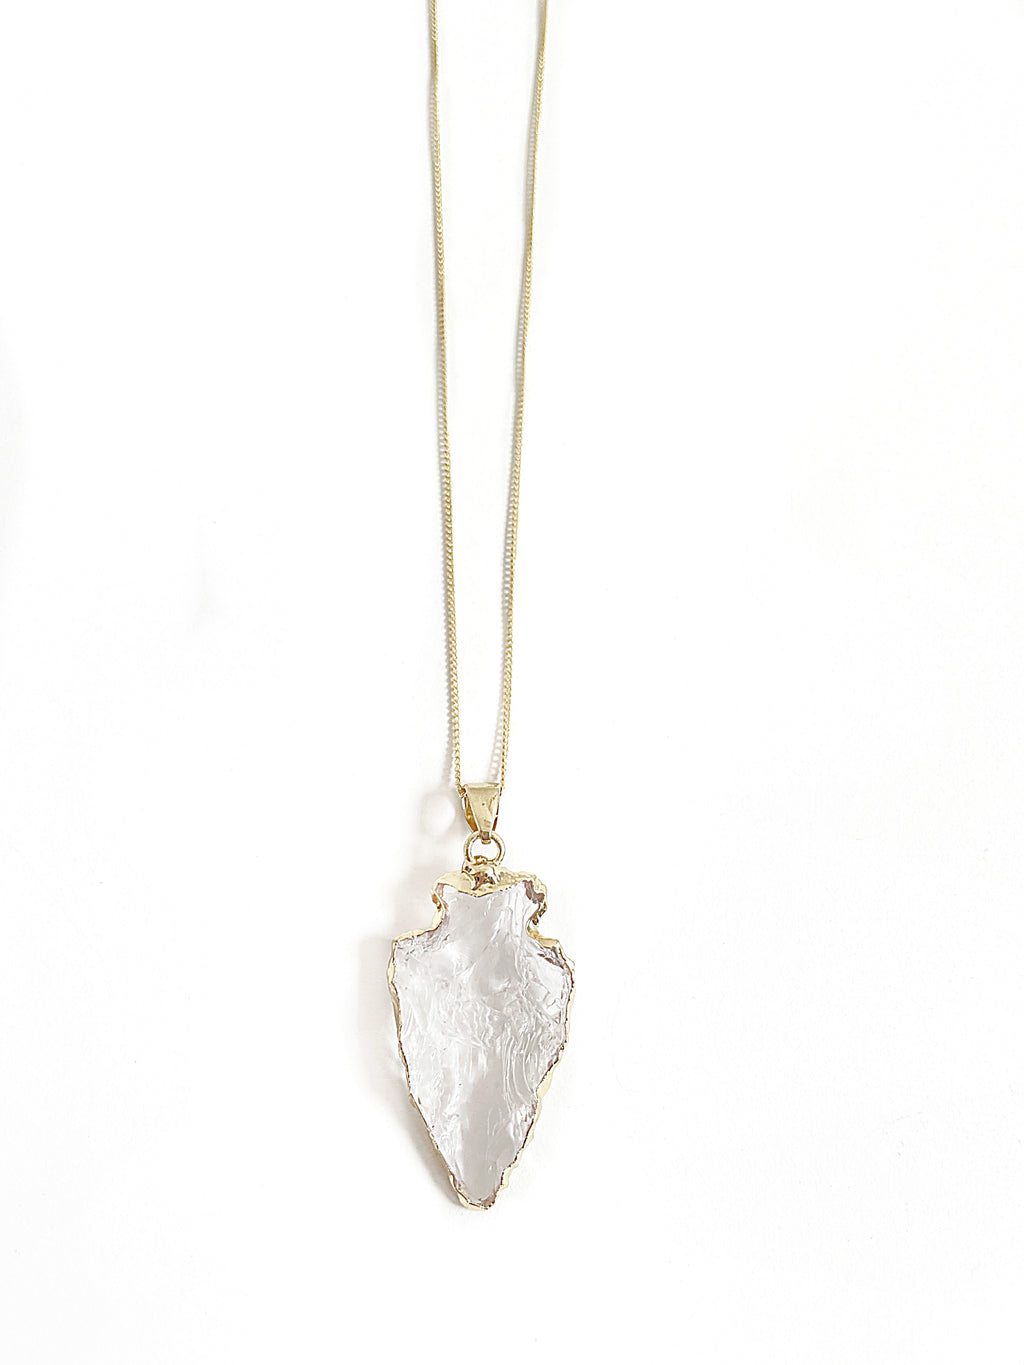 Bergkristallpfeil Halskette, vergoldet Crystal and Sage Jewelry